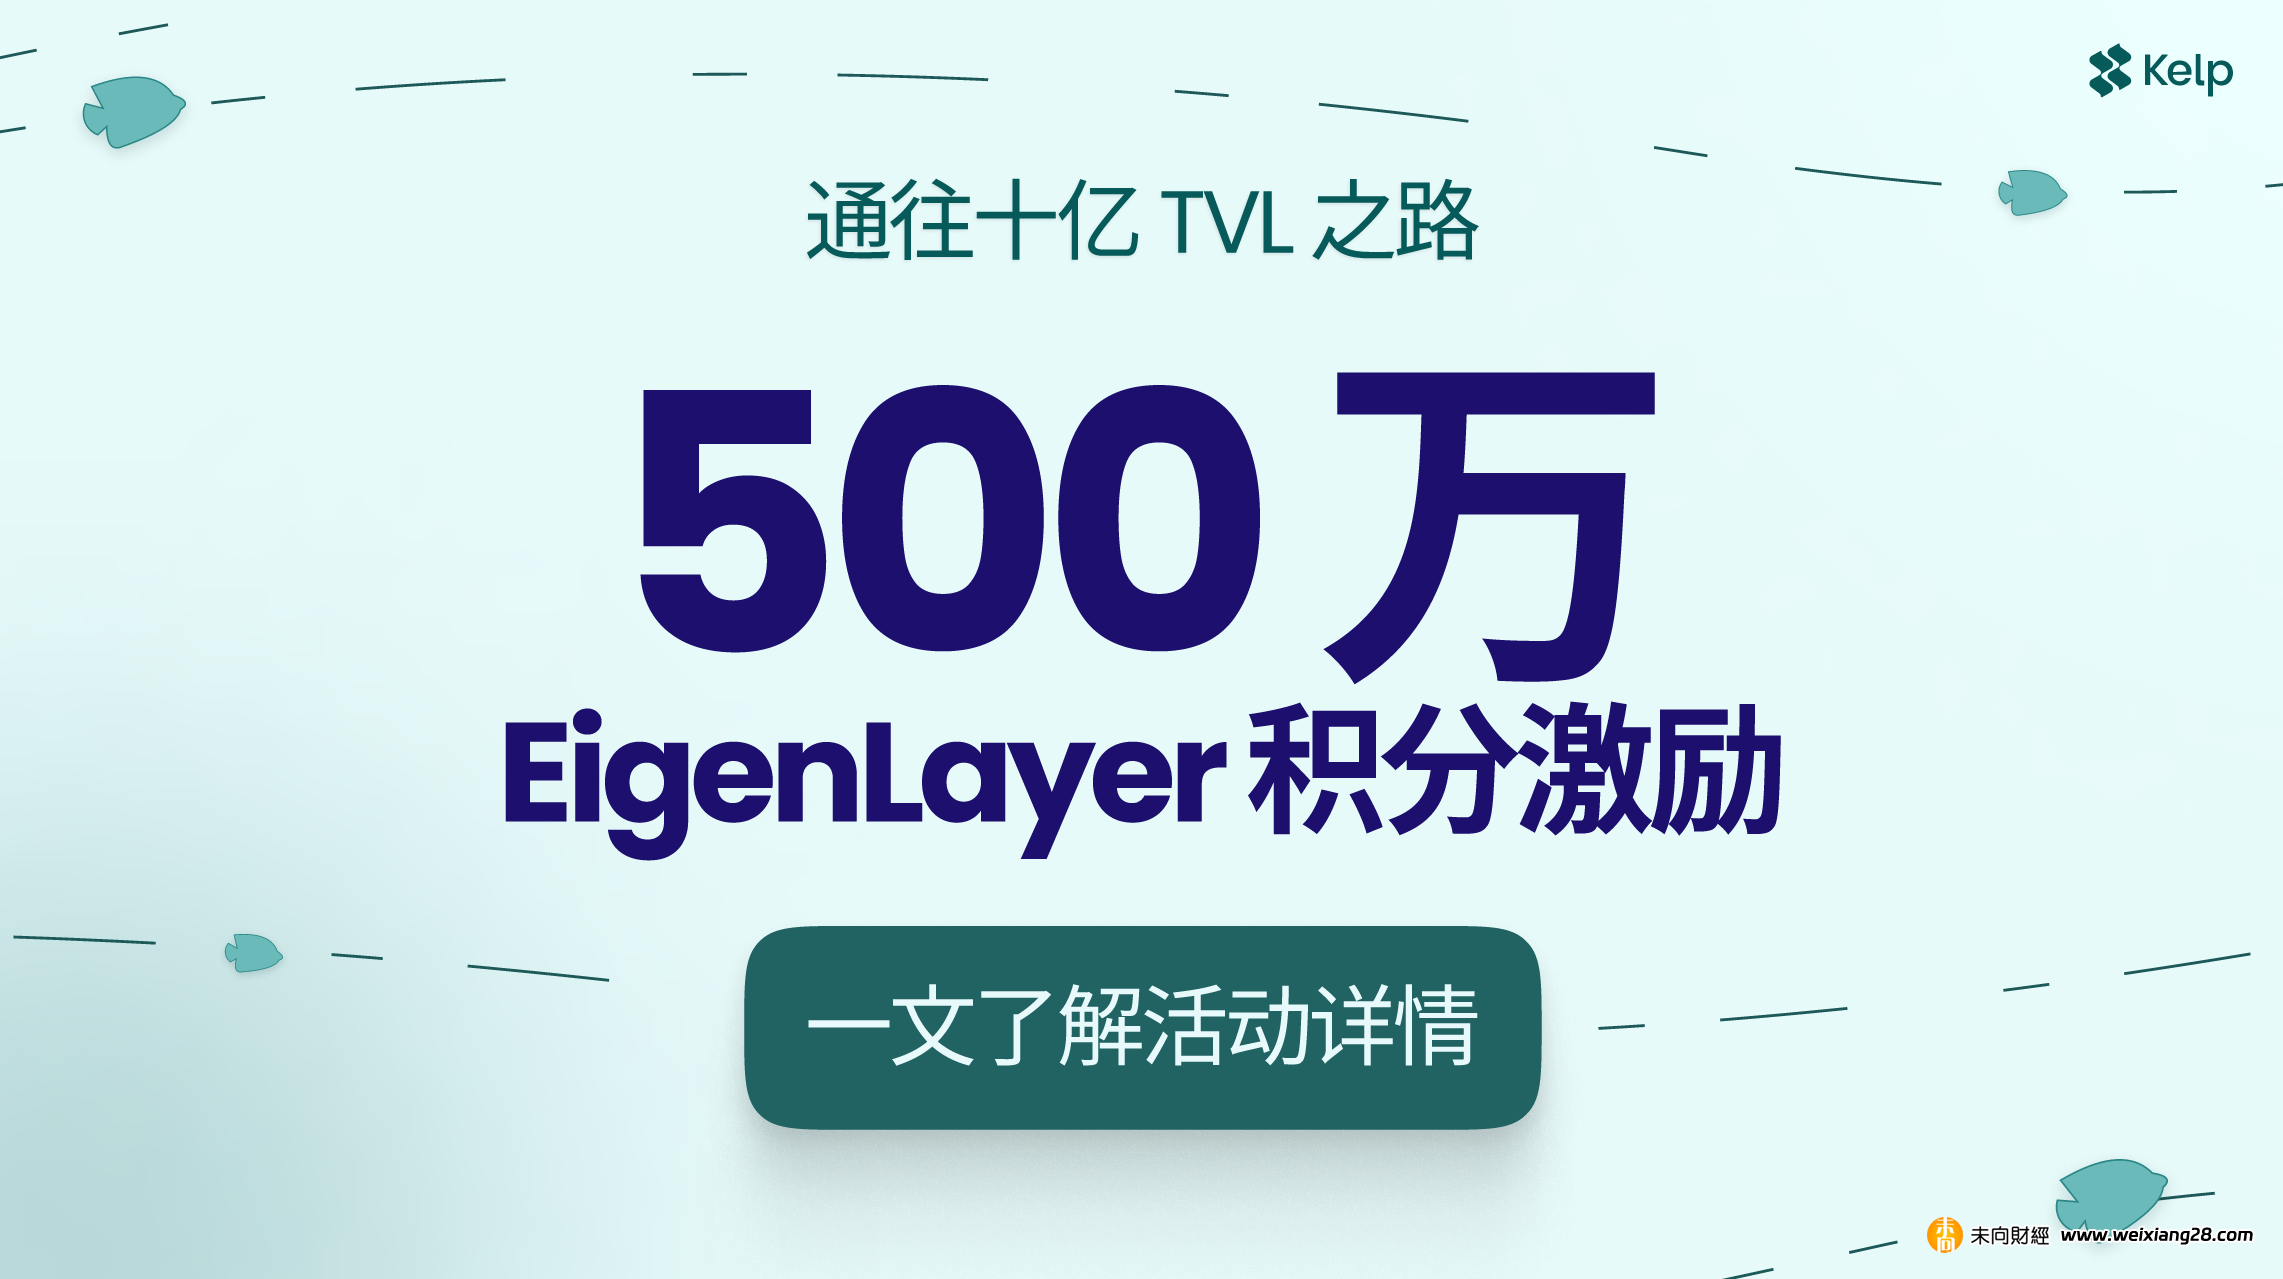 Kelp DAO 推出「通往十億之路」活動，500 萬 EigenLayer 積分激勵再質押用戶插图